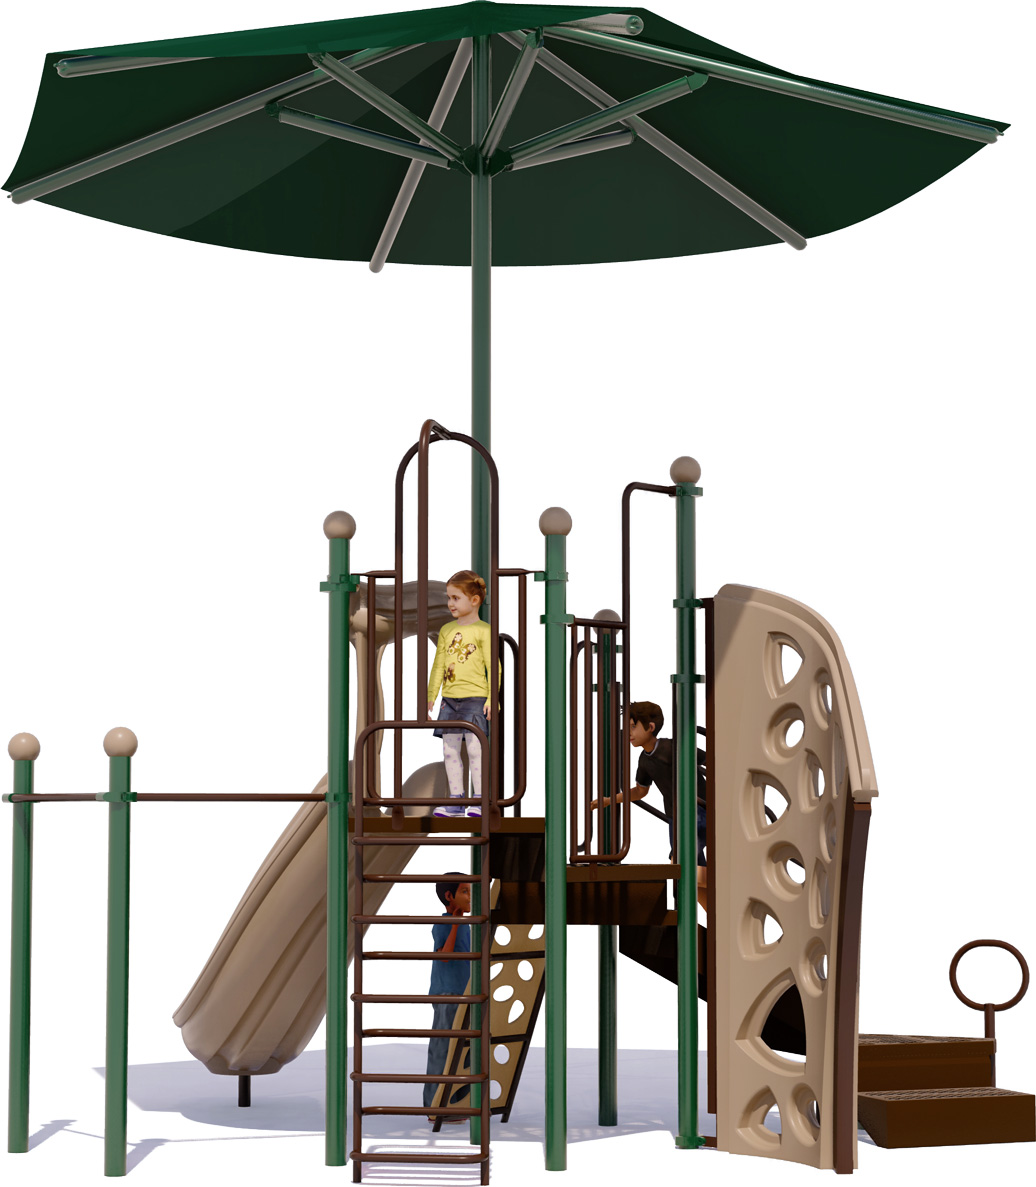 Kool Kids - Commercial Playground Equipment 